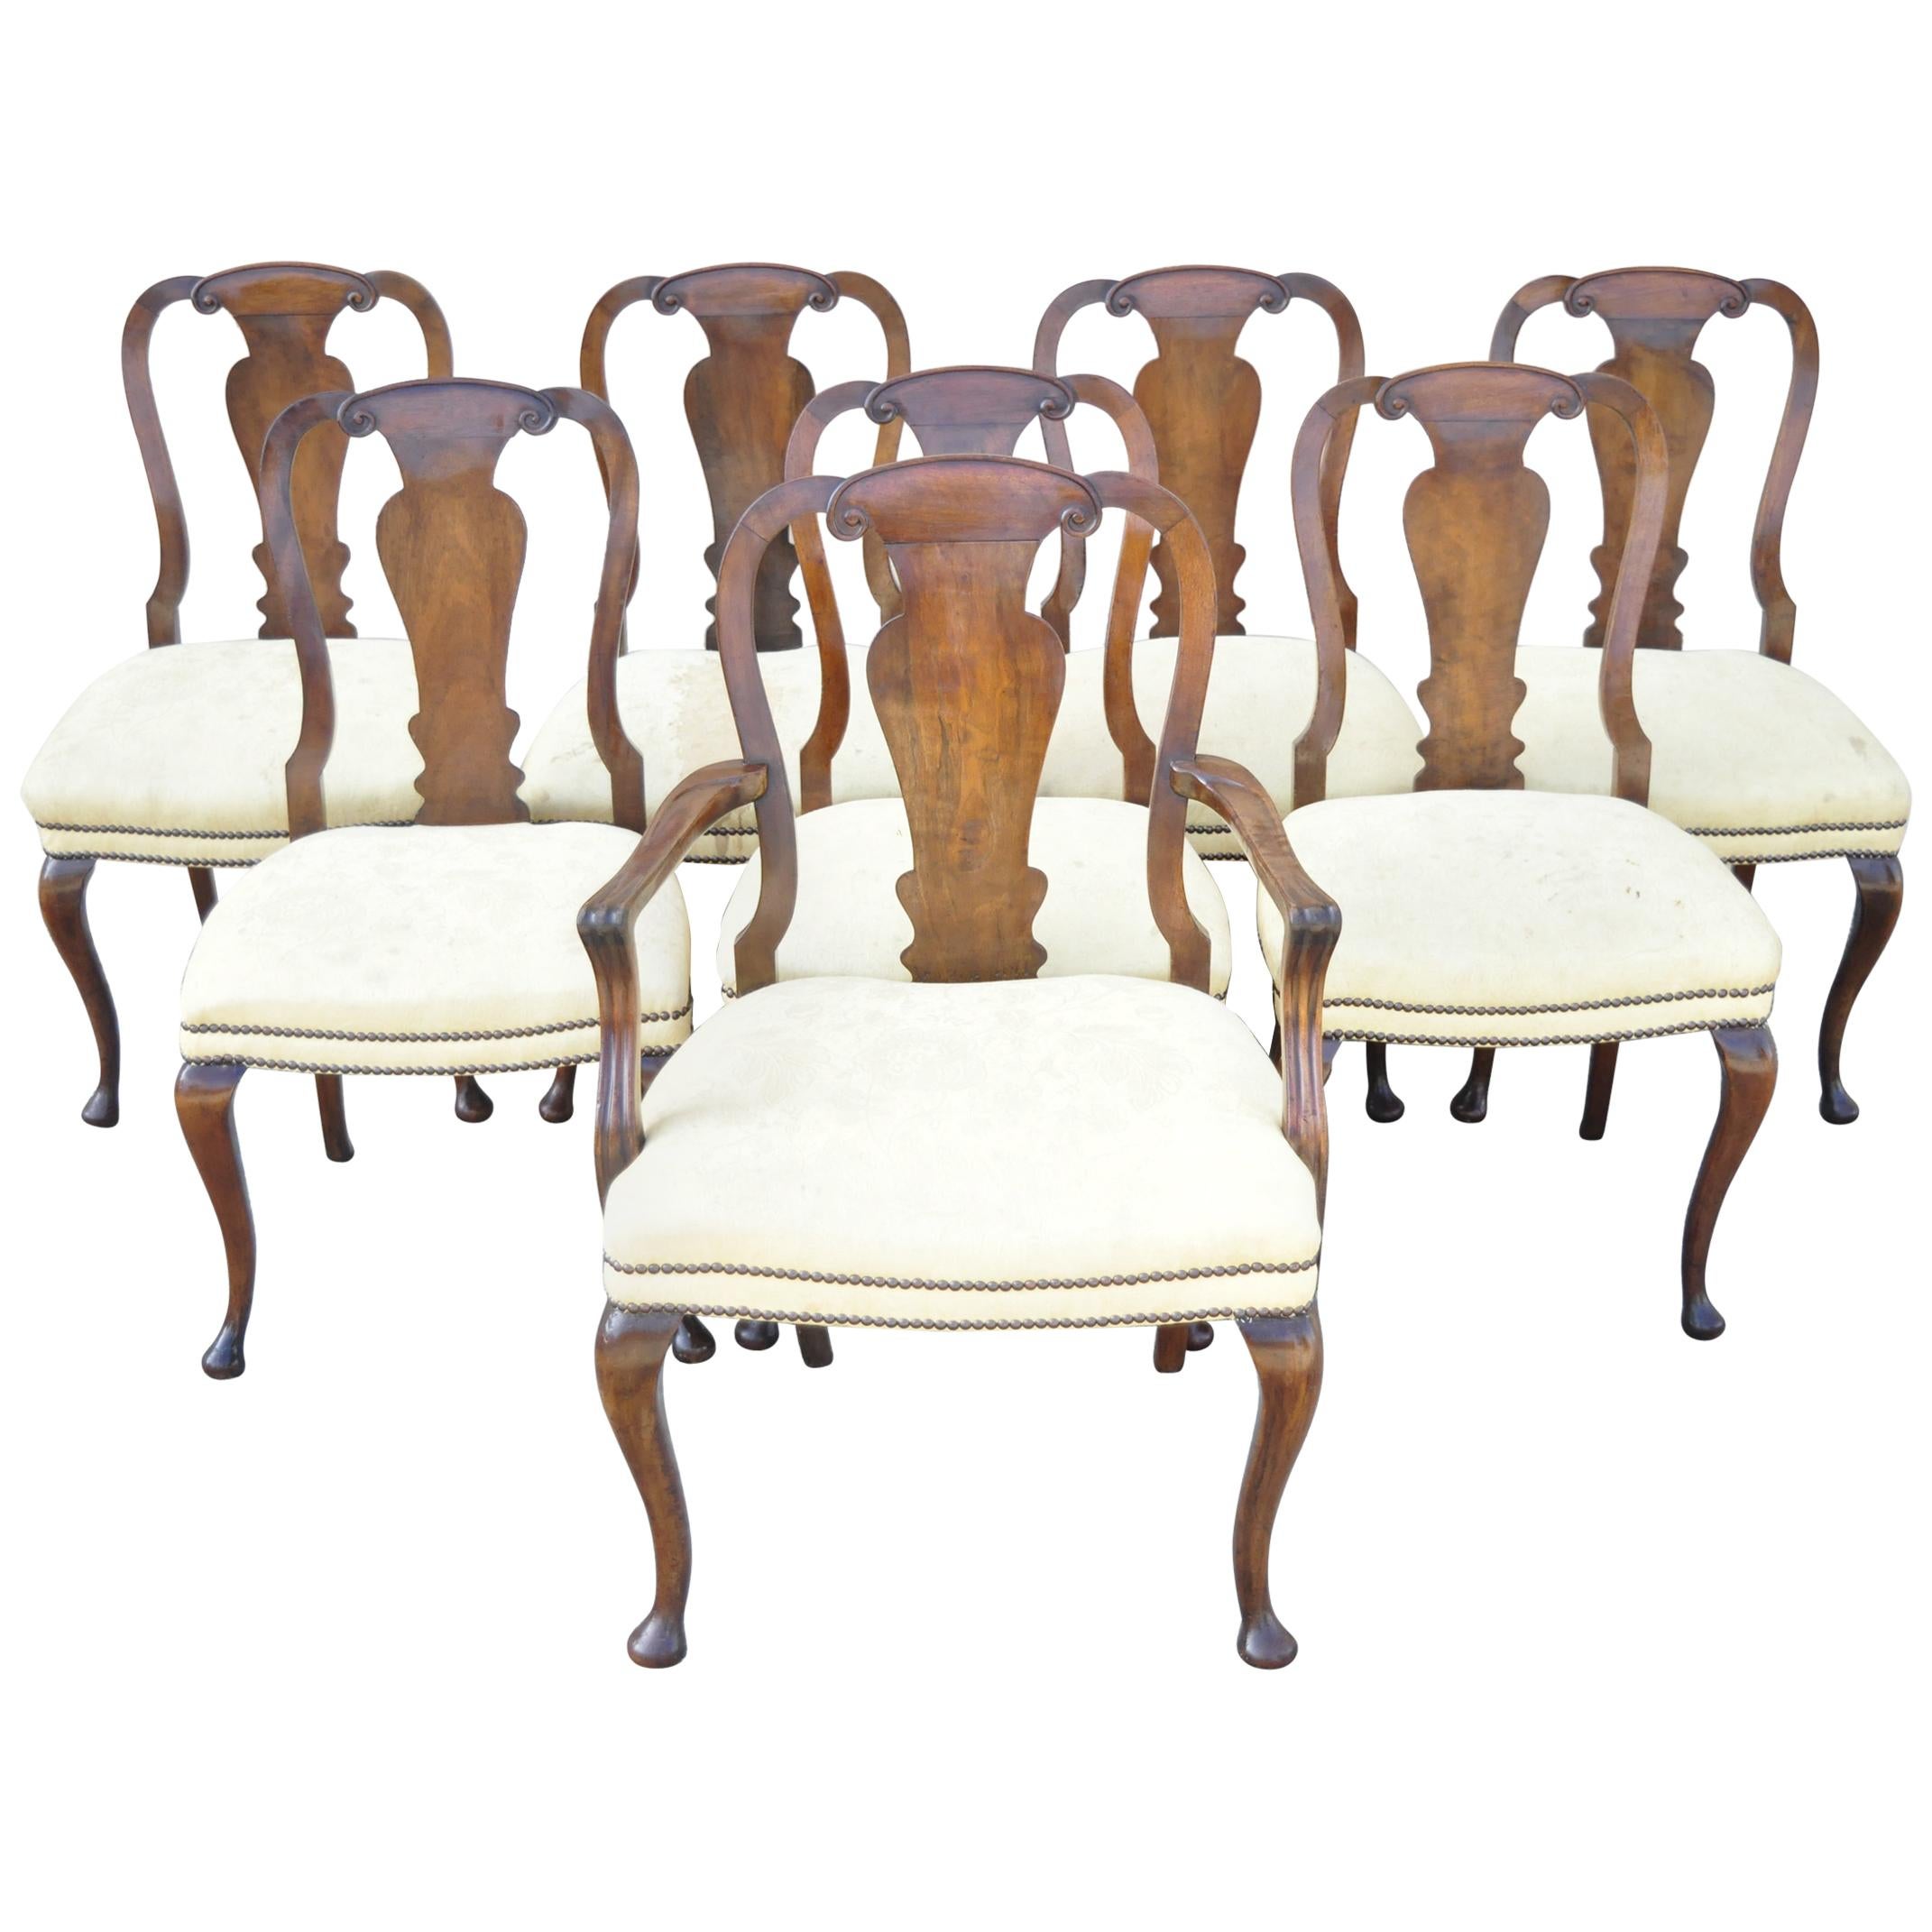 19th Century English Queen Anne Burr Walnut Splat Back Dining Chair, Set of 8